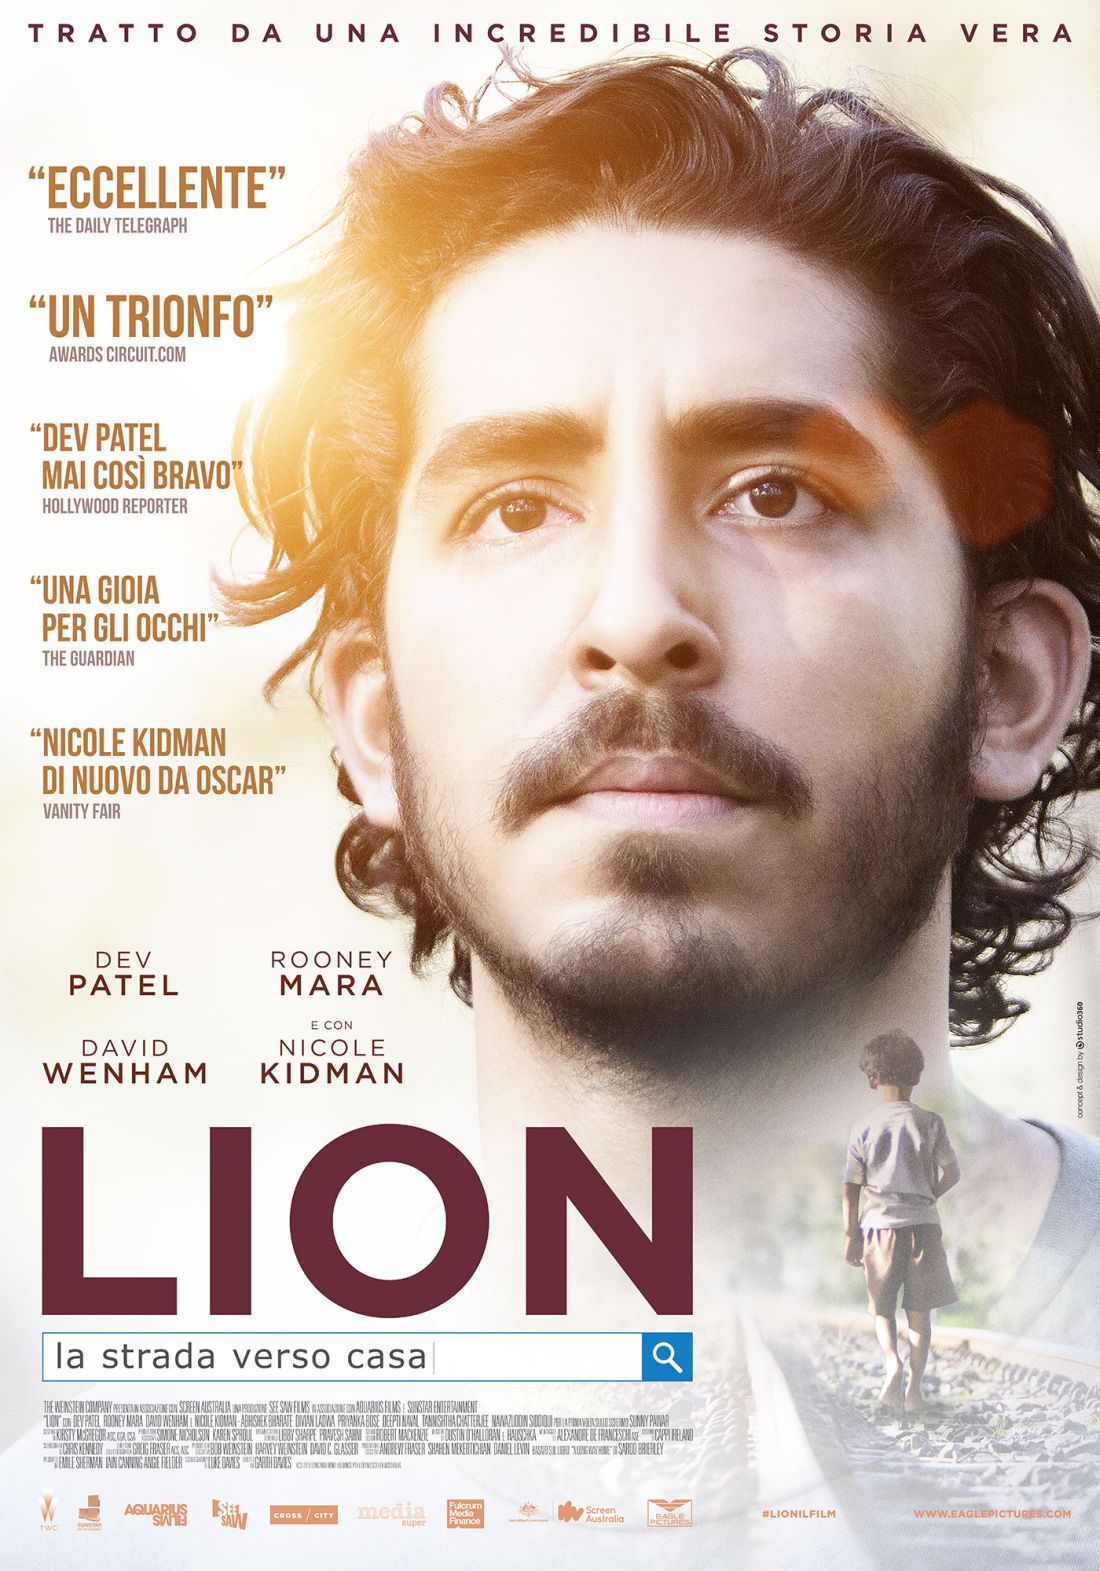 https://movieplayer.it/film/lion-la-strada-verso-casa_41812/